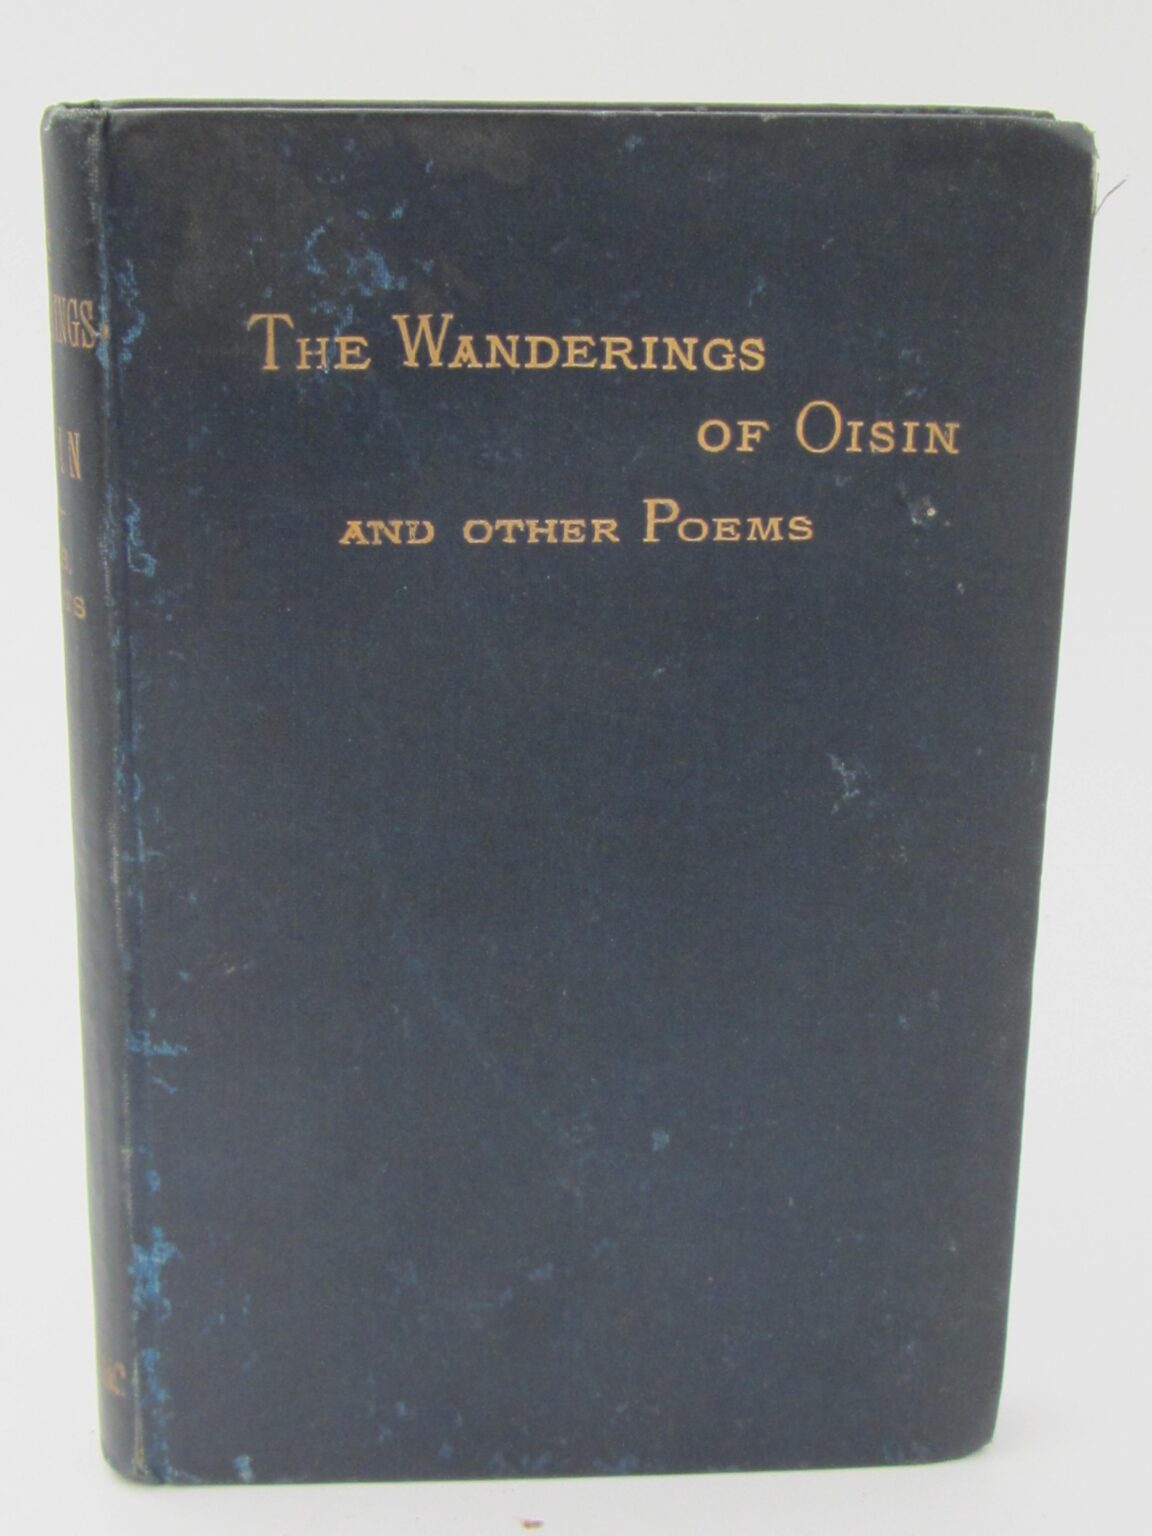 the wanderings of oisin summary